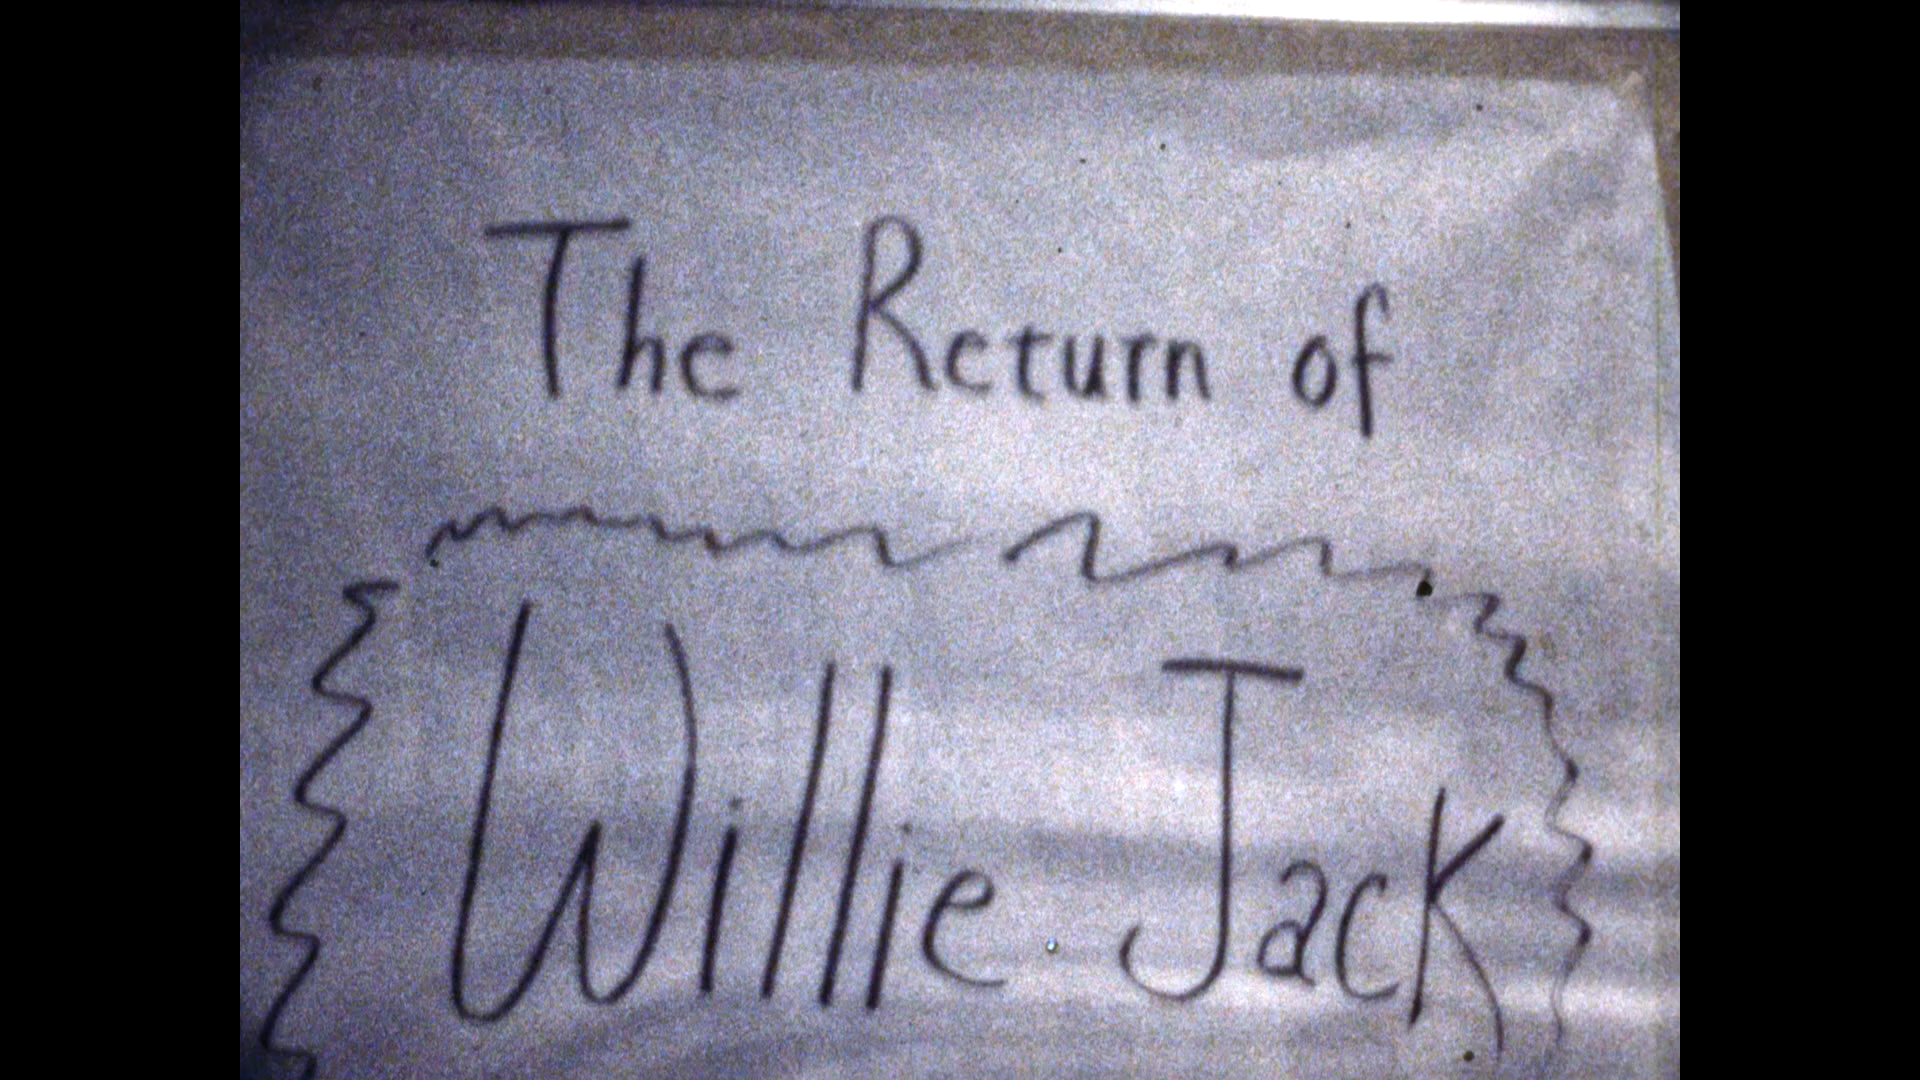 Shorts: The Return of Willie Jack